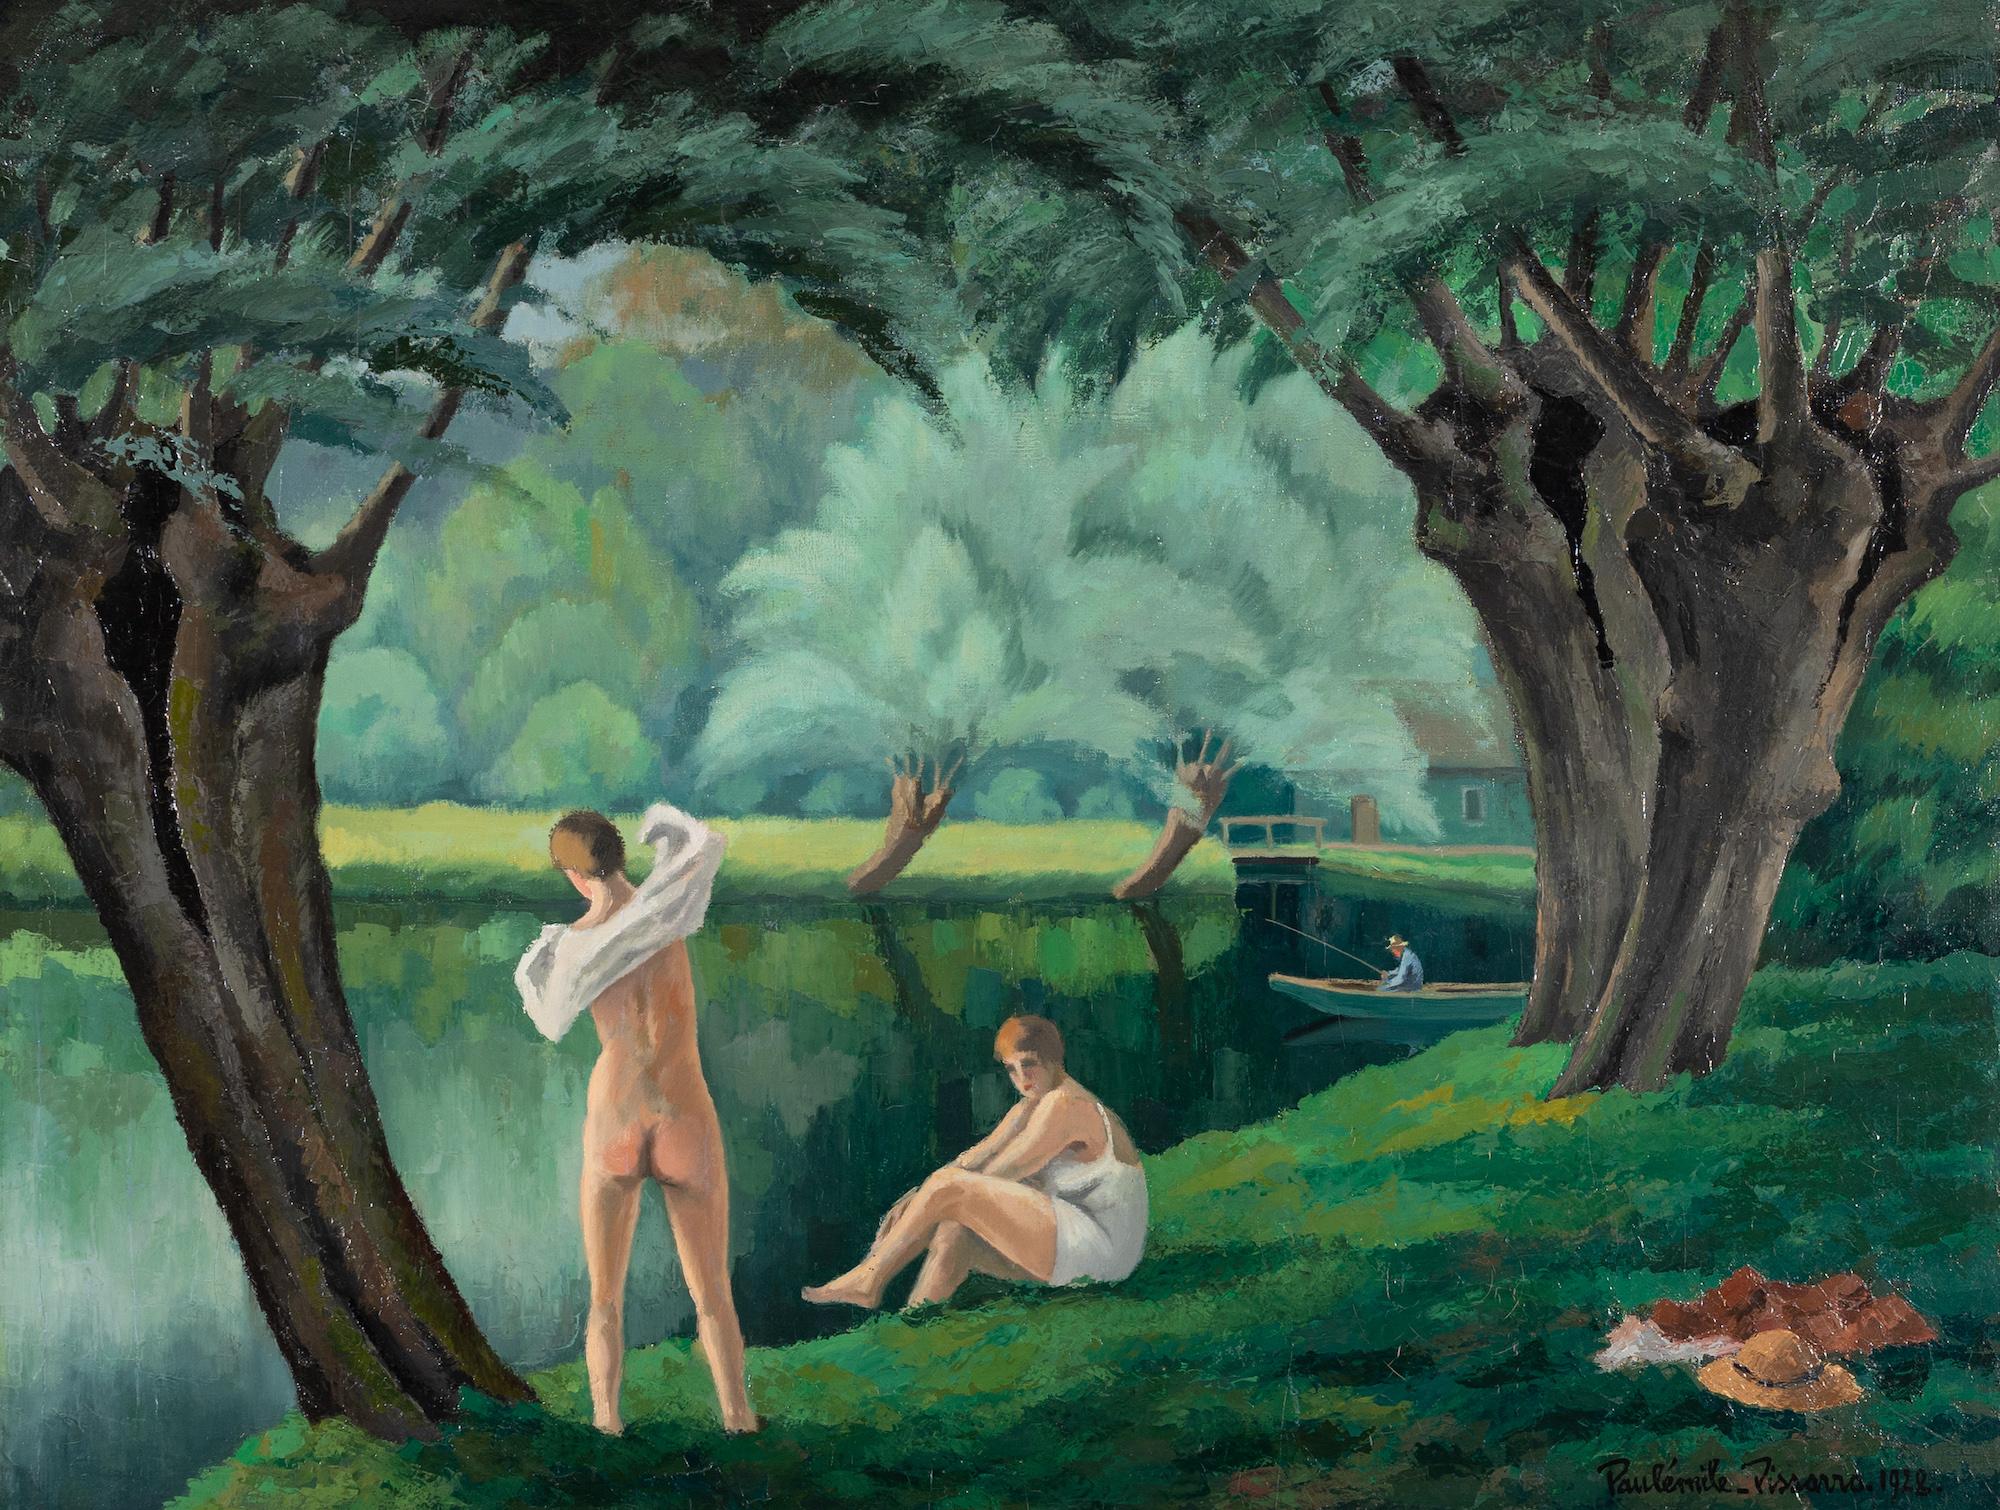 Paul Emile Pissarro Figurative Painting - Les Baigneuses by Paulémile Pissarro - Nude scene, riverscene painting